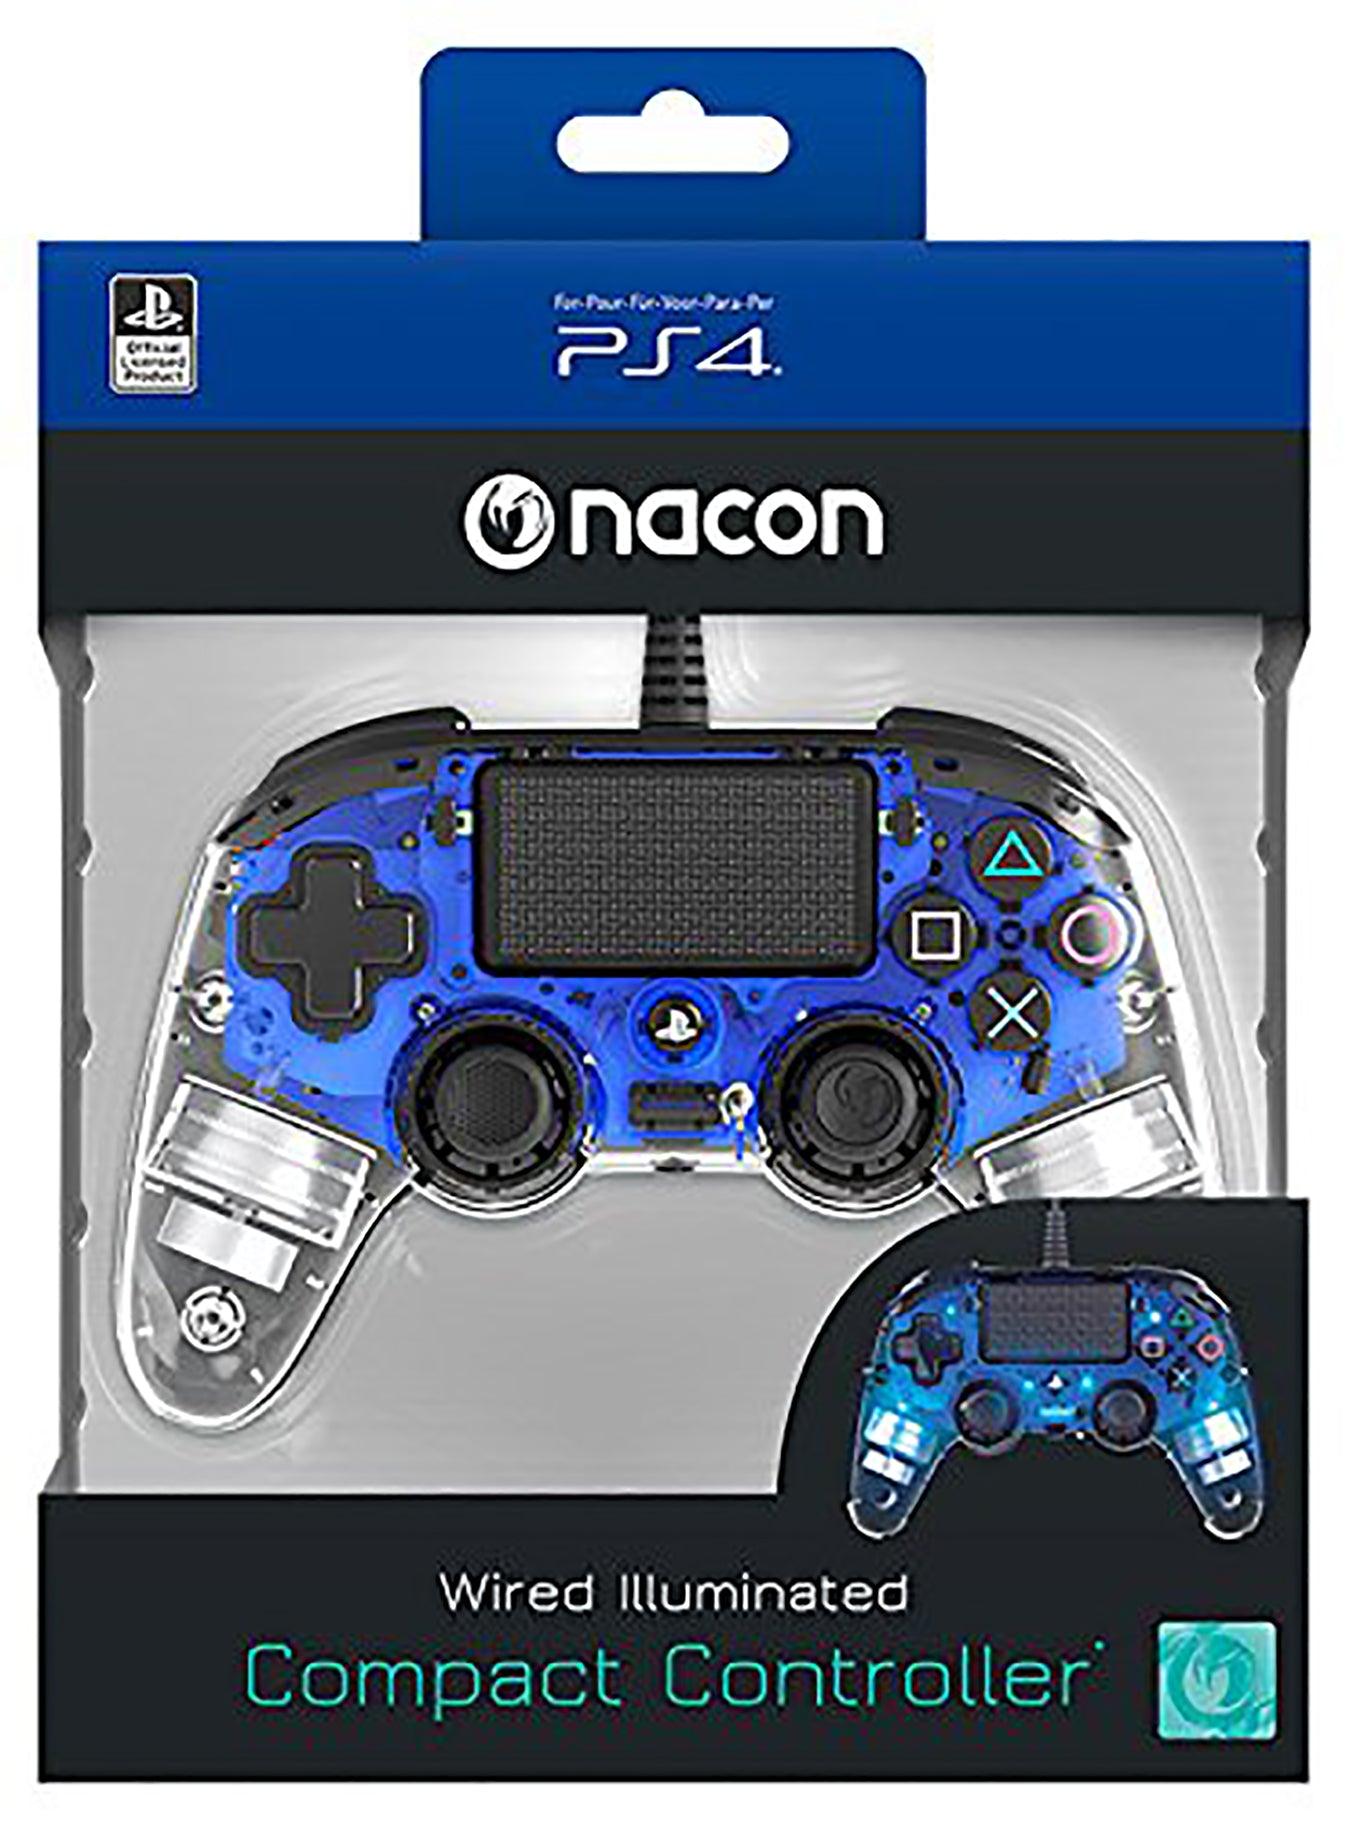 Nacon Ps4 Compact Ctrl Blue Le - Want a New Gadget